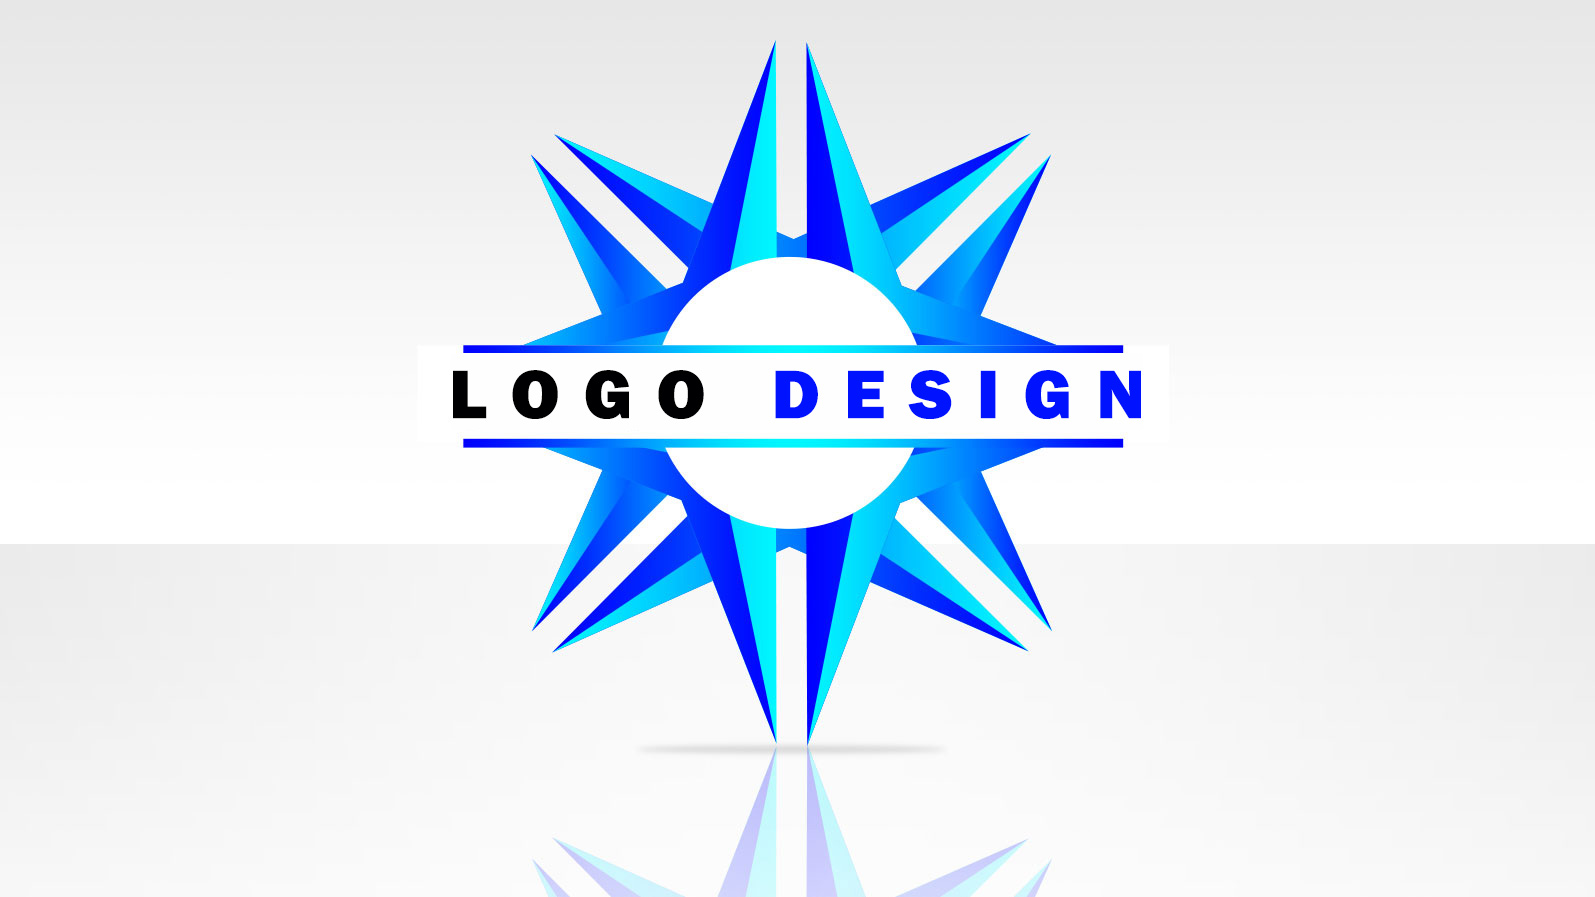 Psd file design graphic digital artwork - Social media & Logos Icons